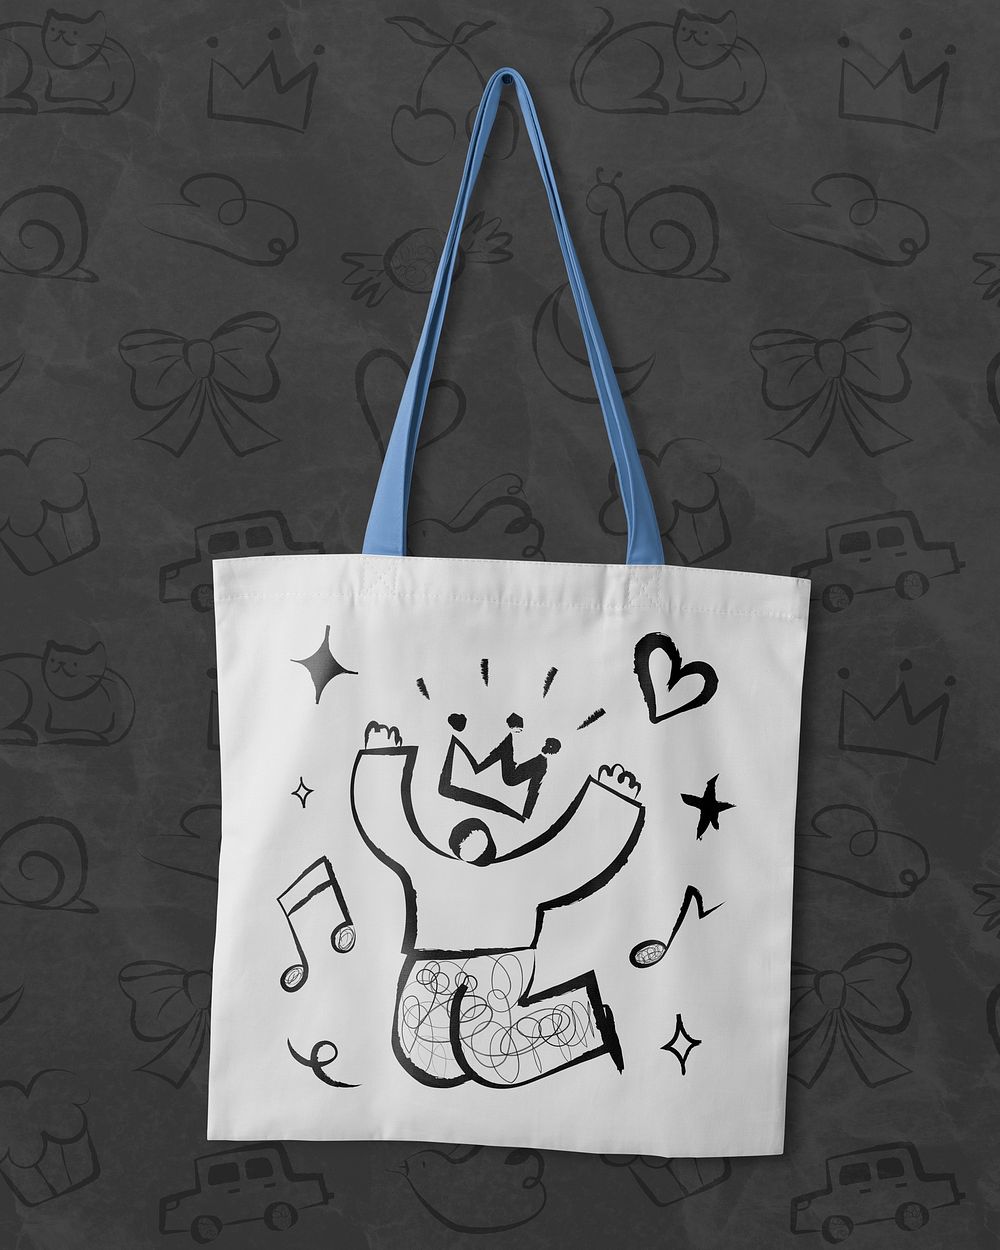 Music doodle canvas tote bag design